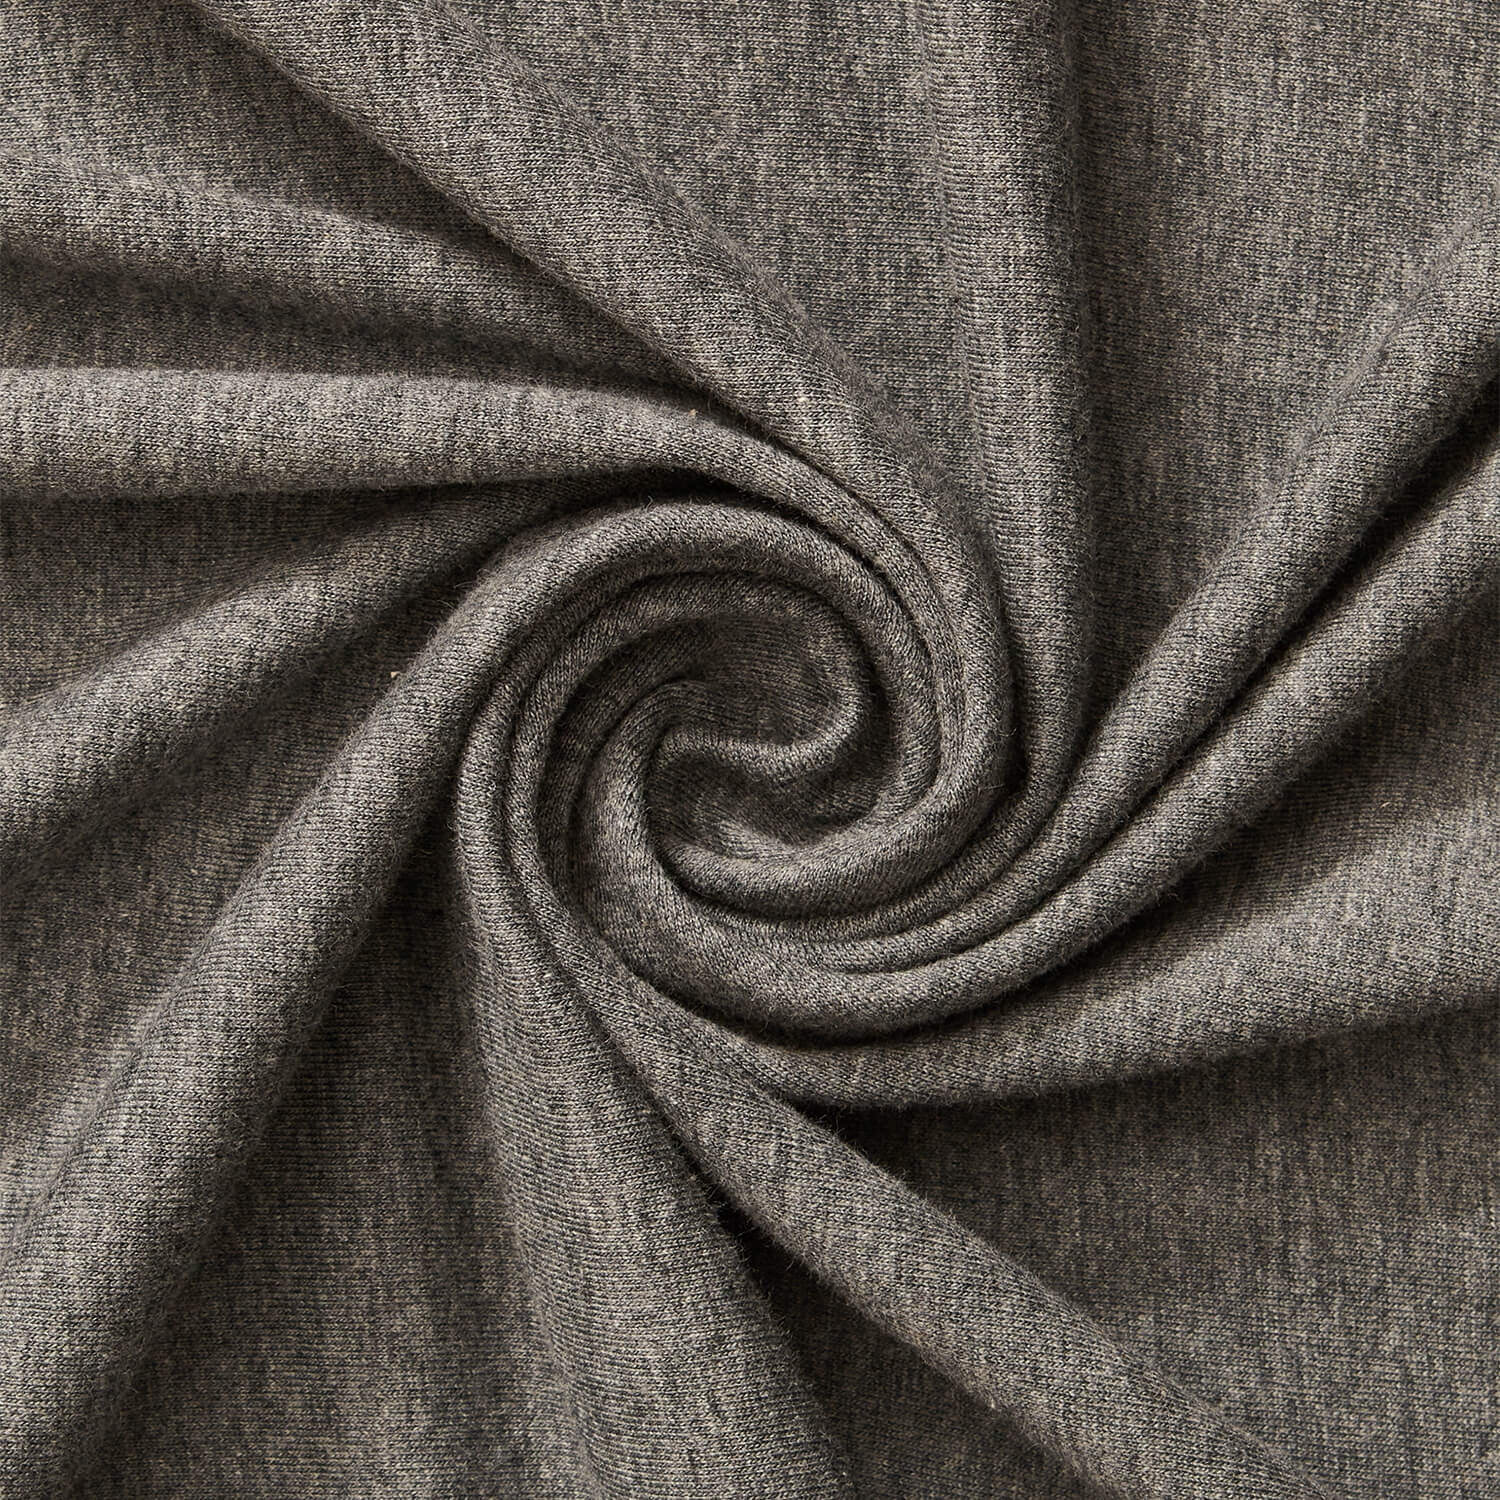 Cotton Jersey Lycra Spandex knit Stretch Fabric 58/60 wide (Orange) 